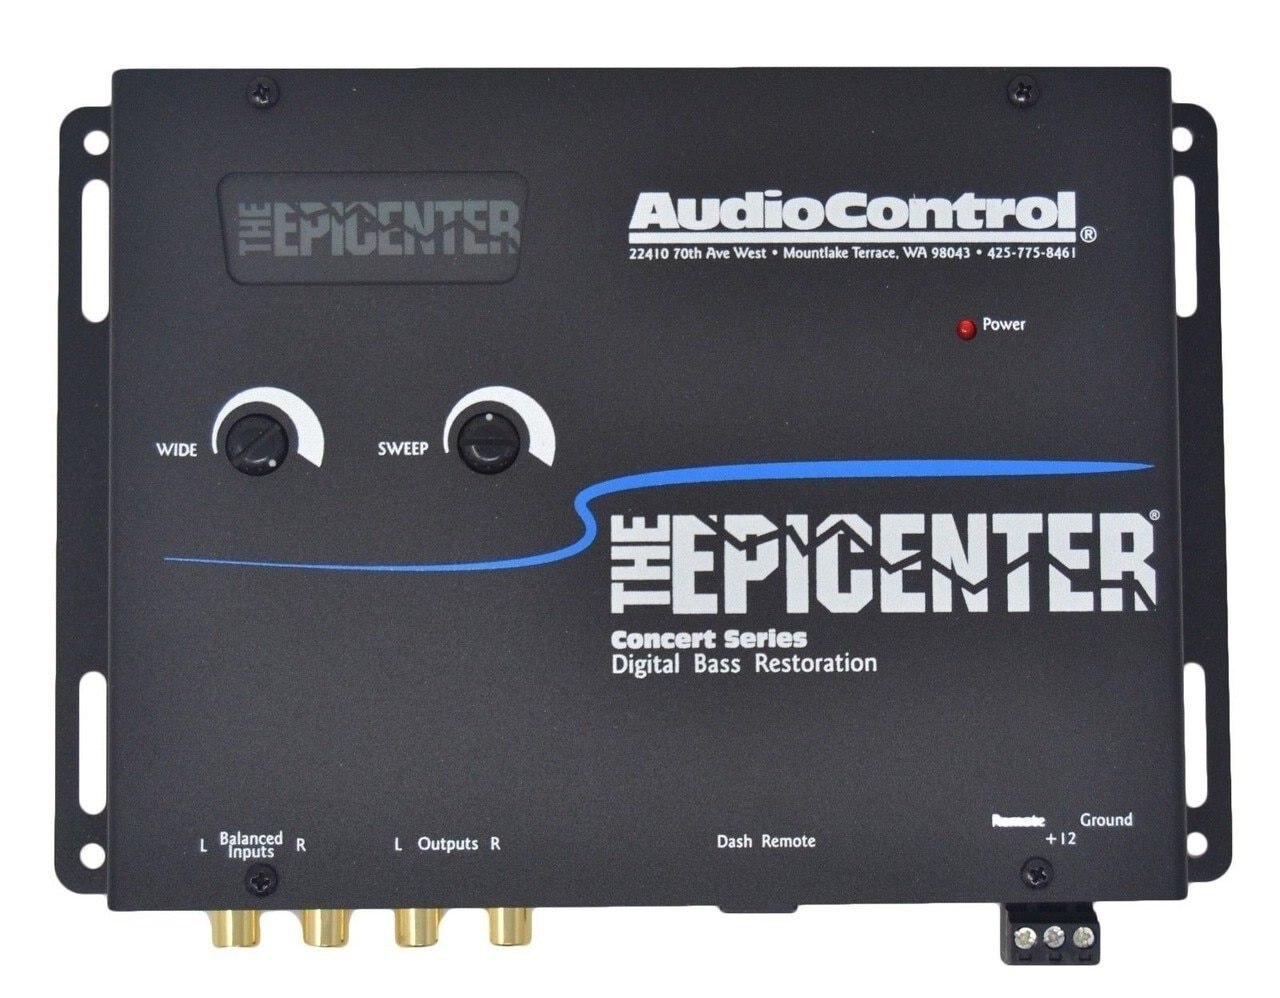 AudioControl Epicenter Digital Bass Restoration Processor - Black